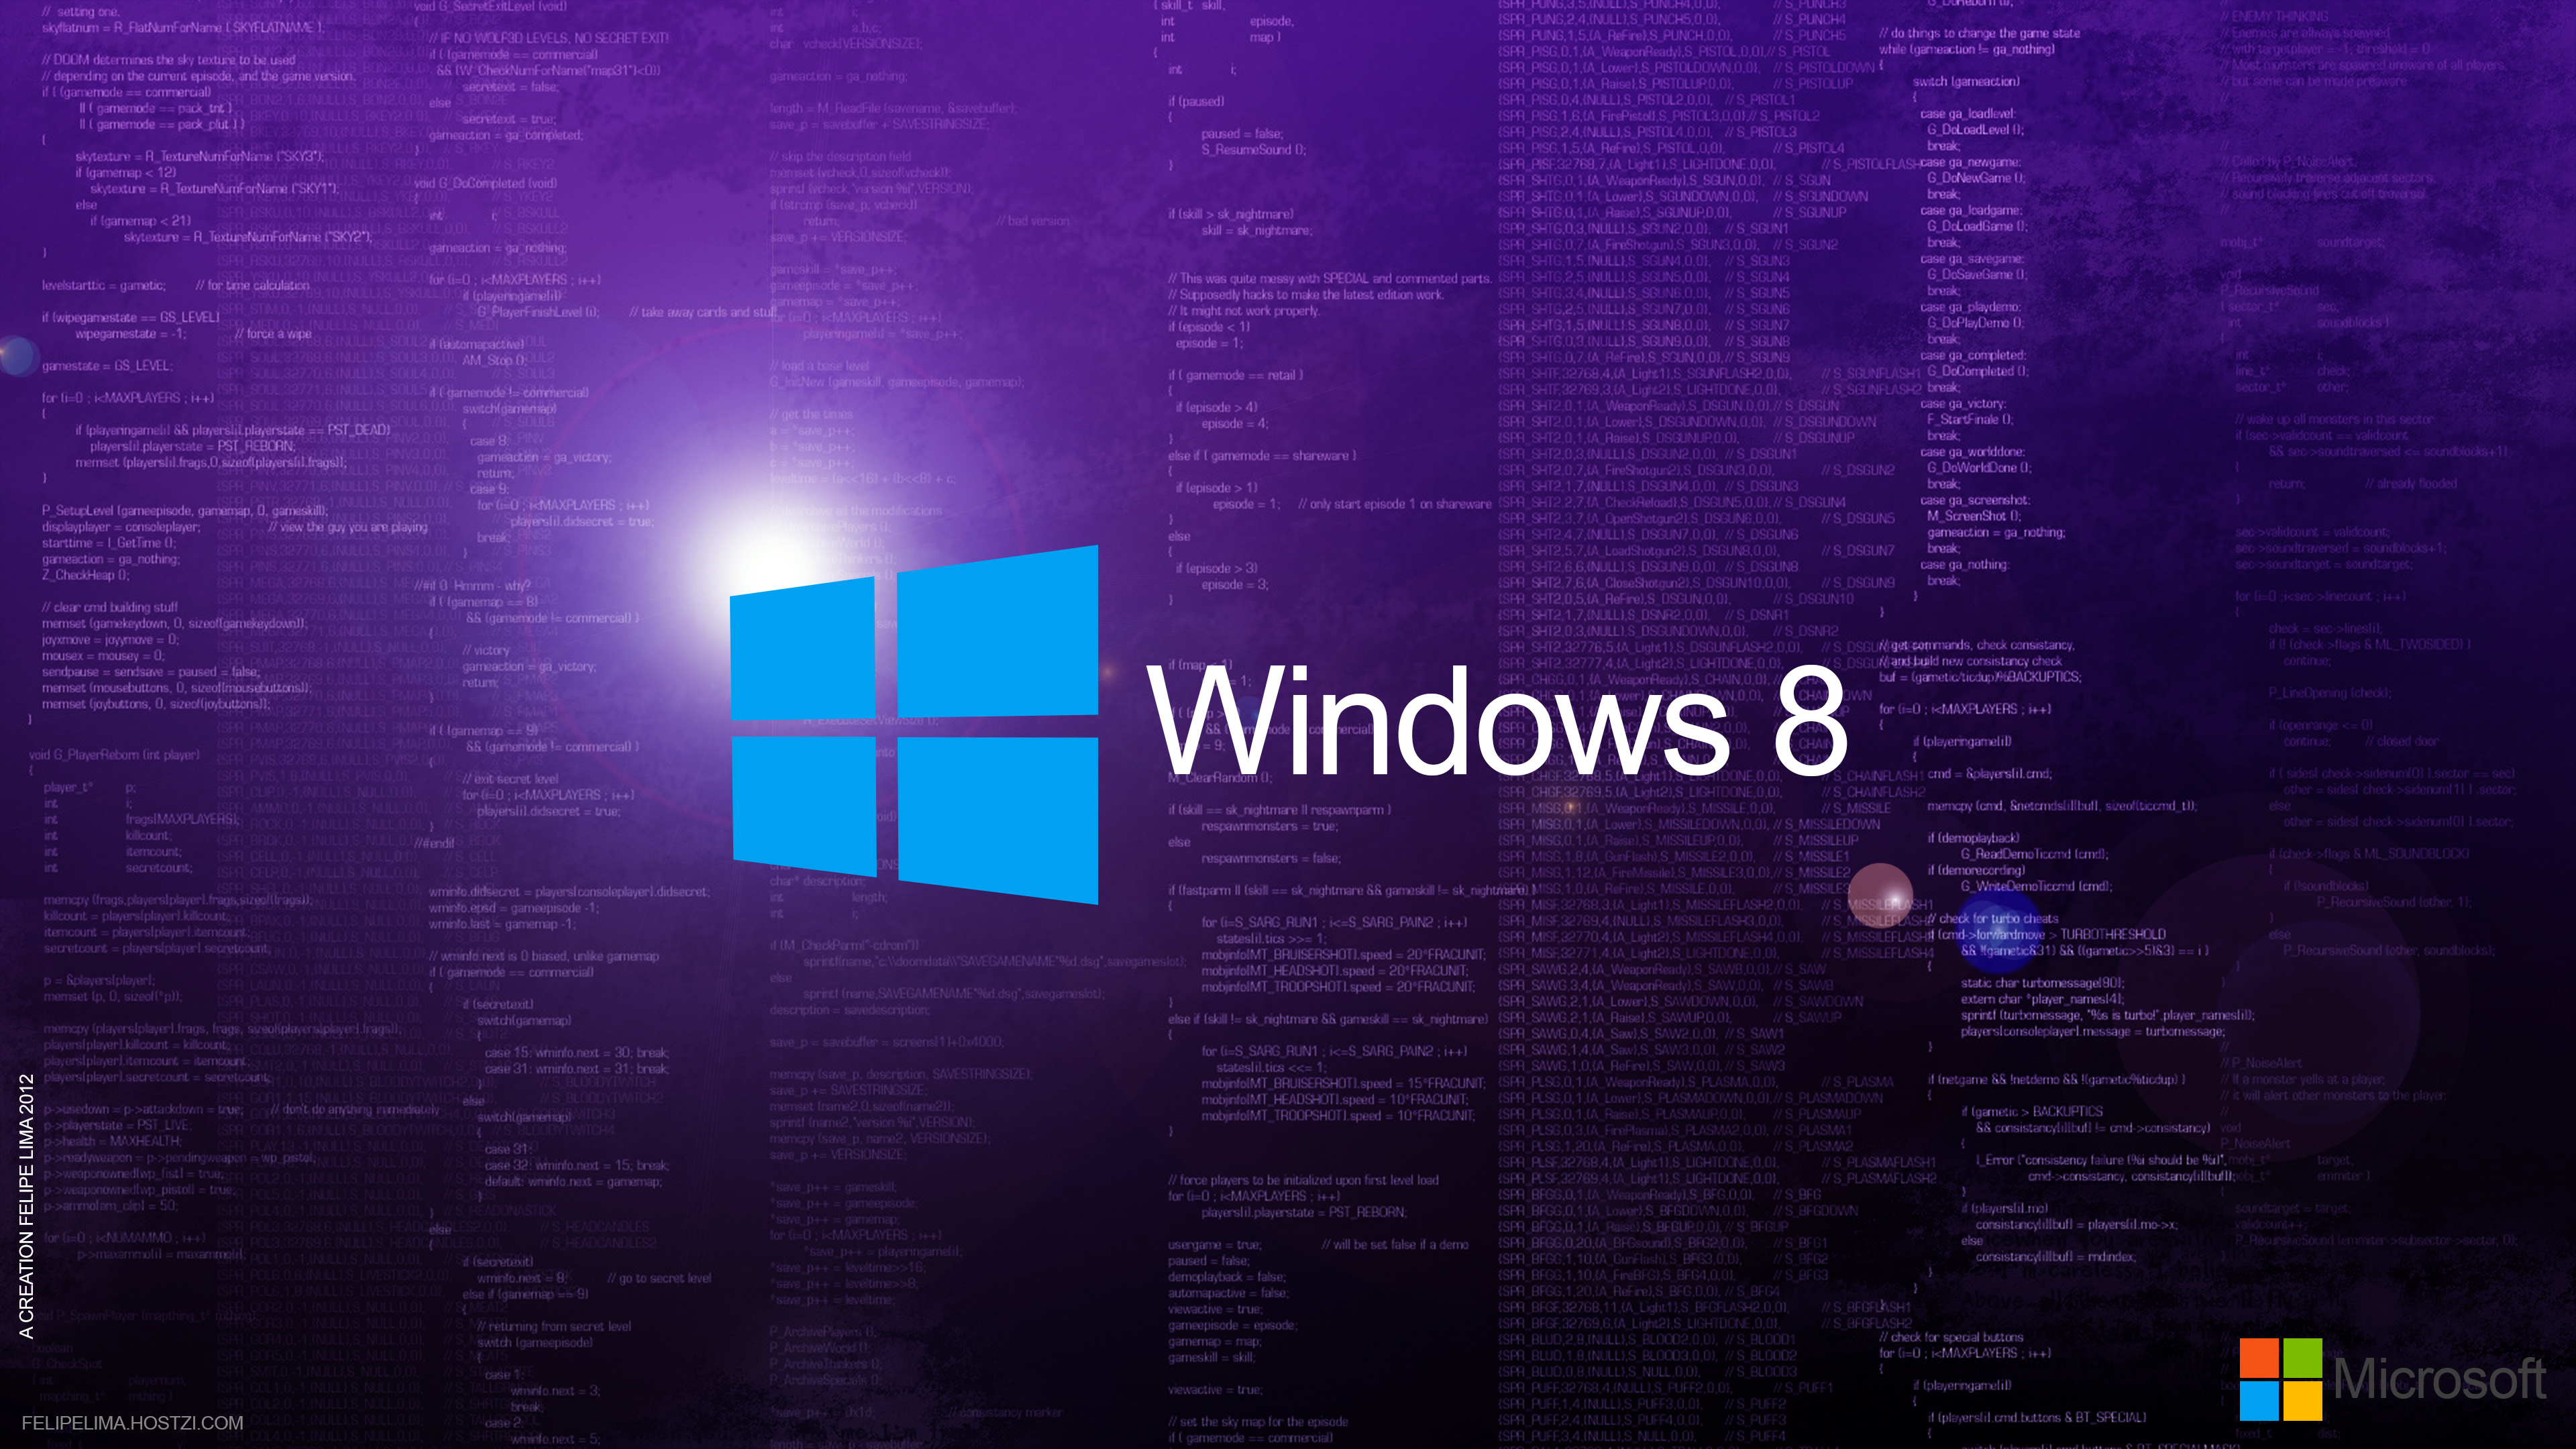 Windows 8 006 Logo